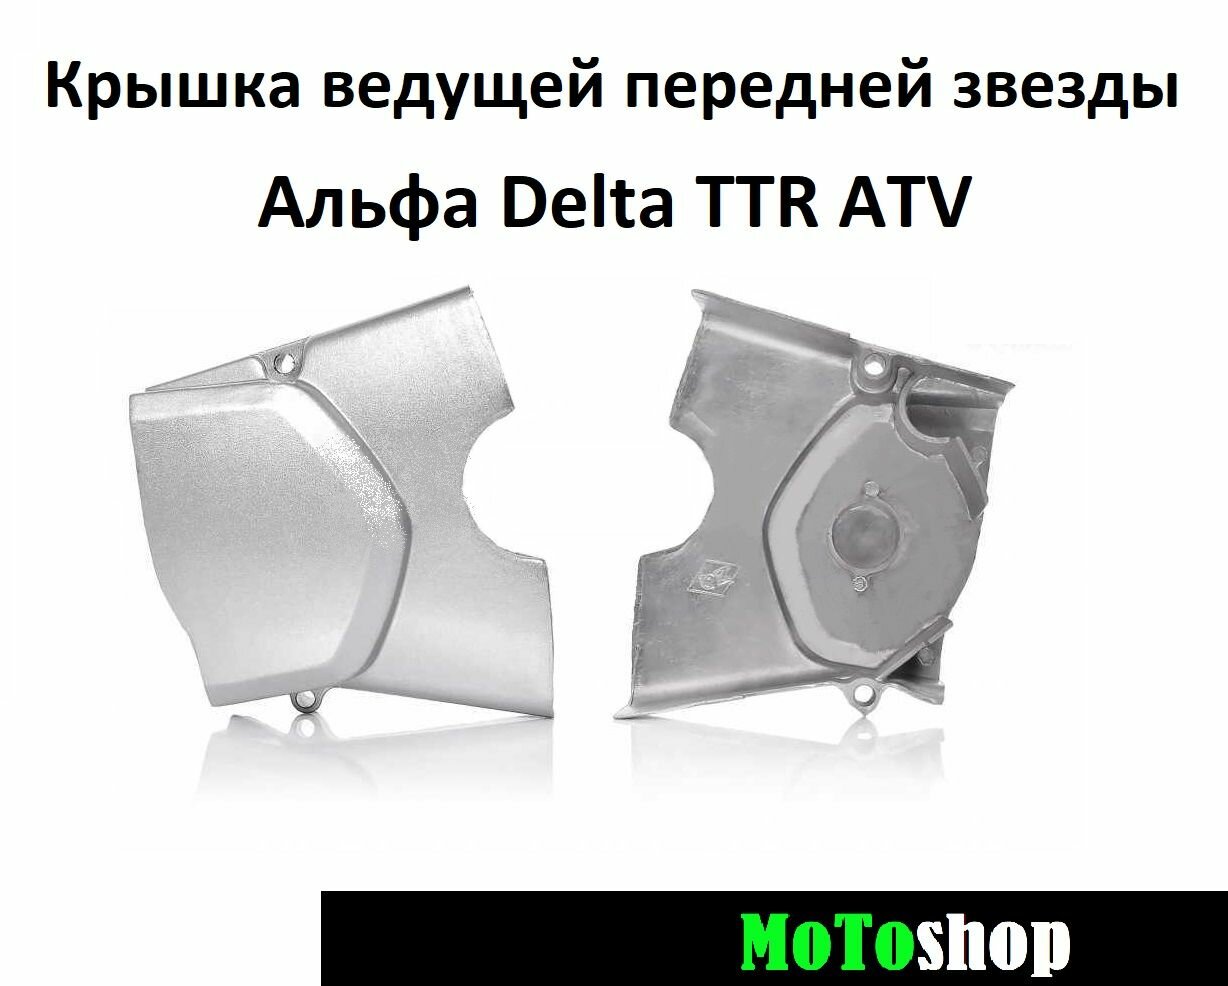 Крышка левая ведущей передней звезды пластик на квадроцикл мопед Альфа Delta TTR ATV 139FMB 147FMH 152FMI